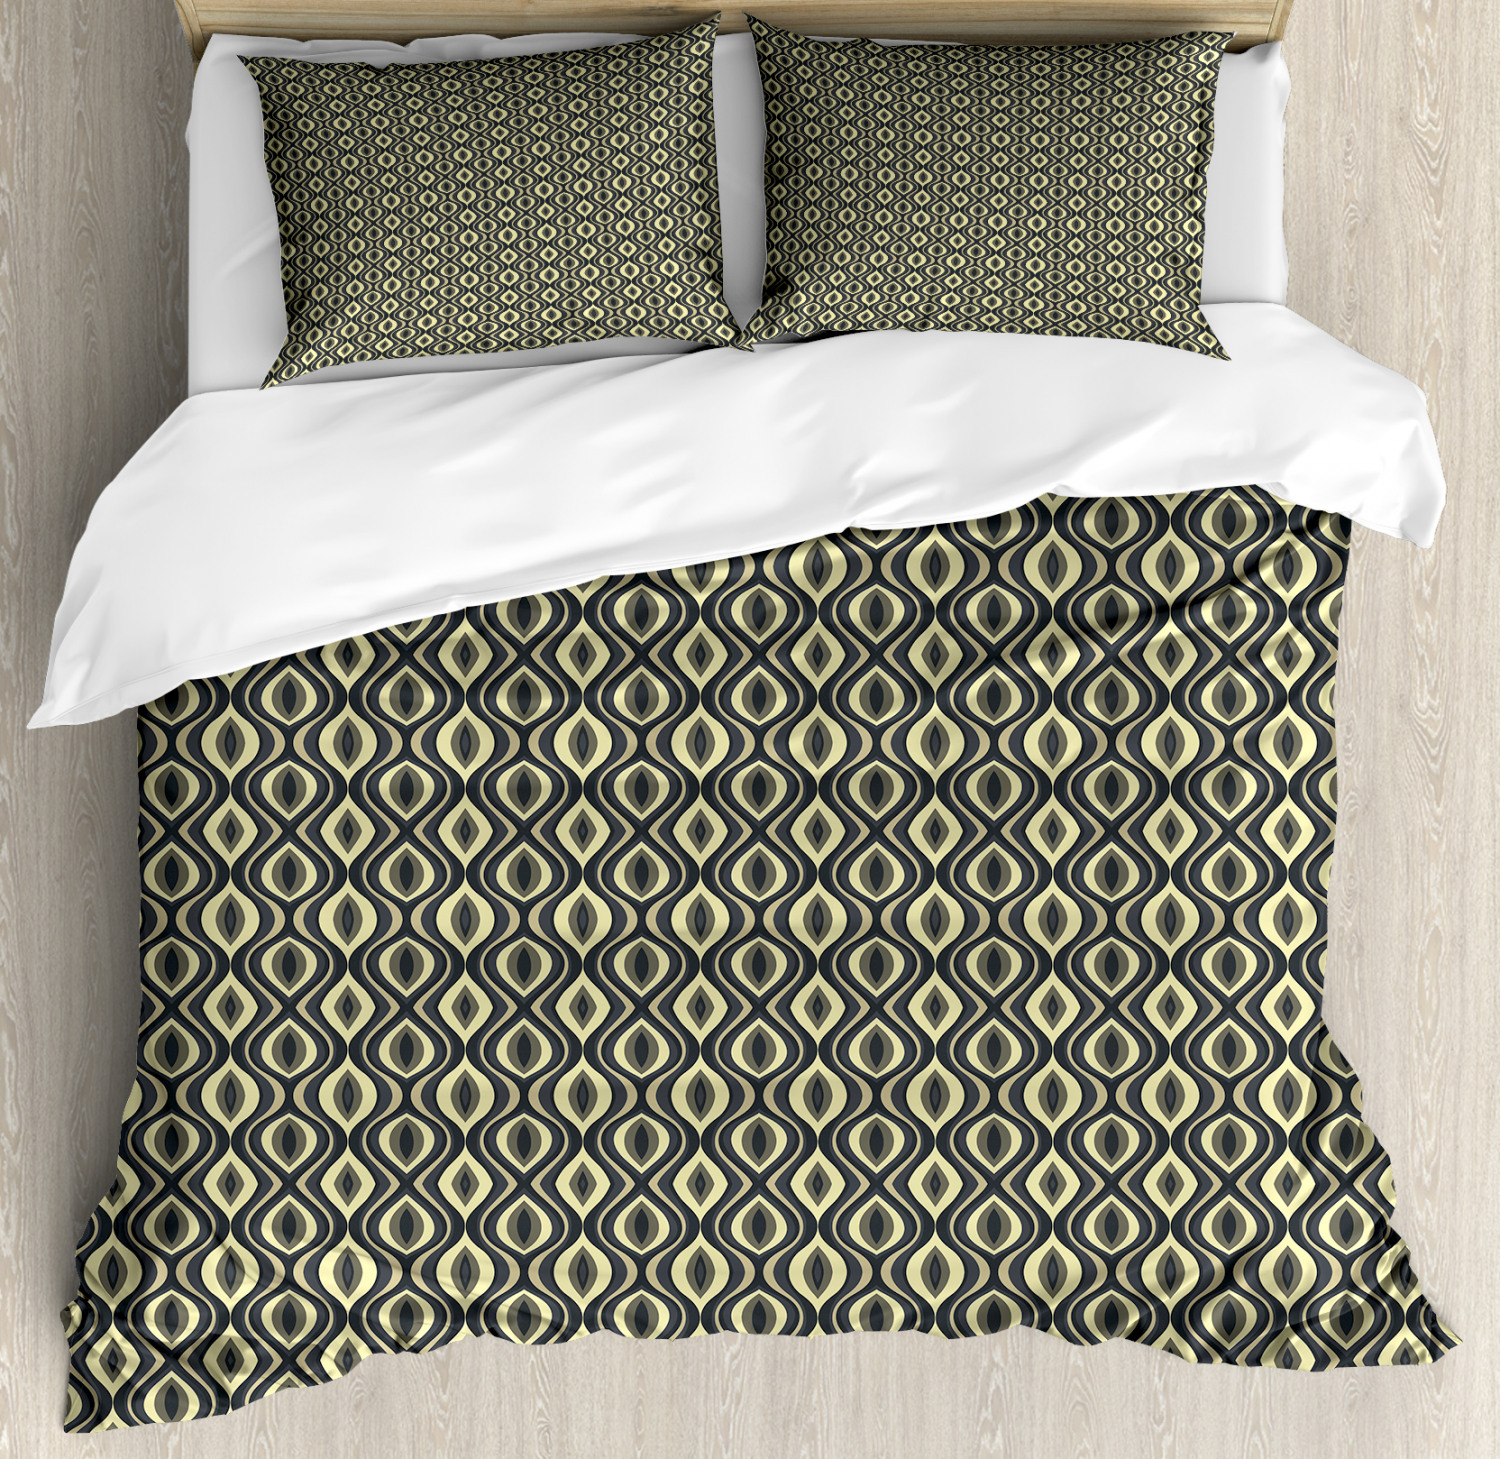 Geometric Duvet Cover Set with Pillow Shams Wavy Vertical Tiles Print